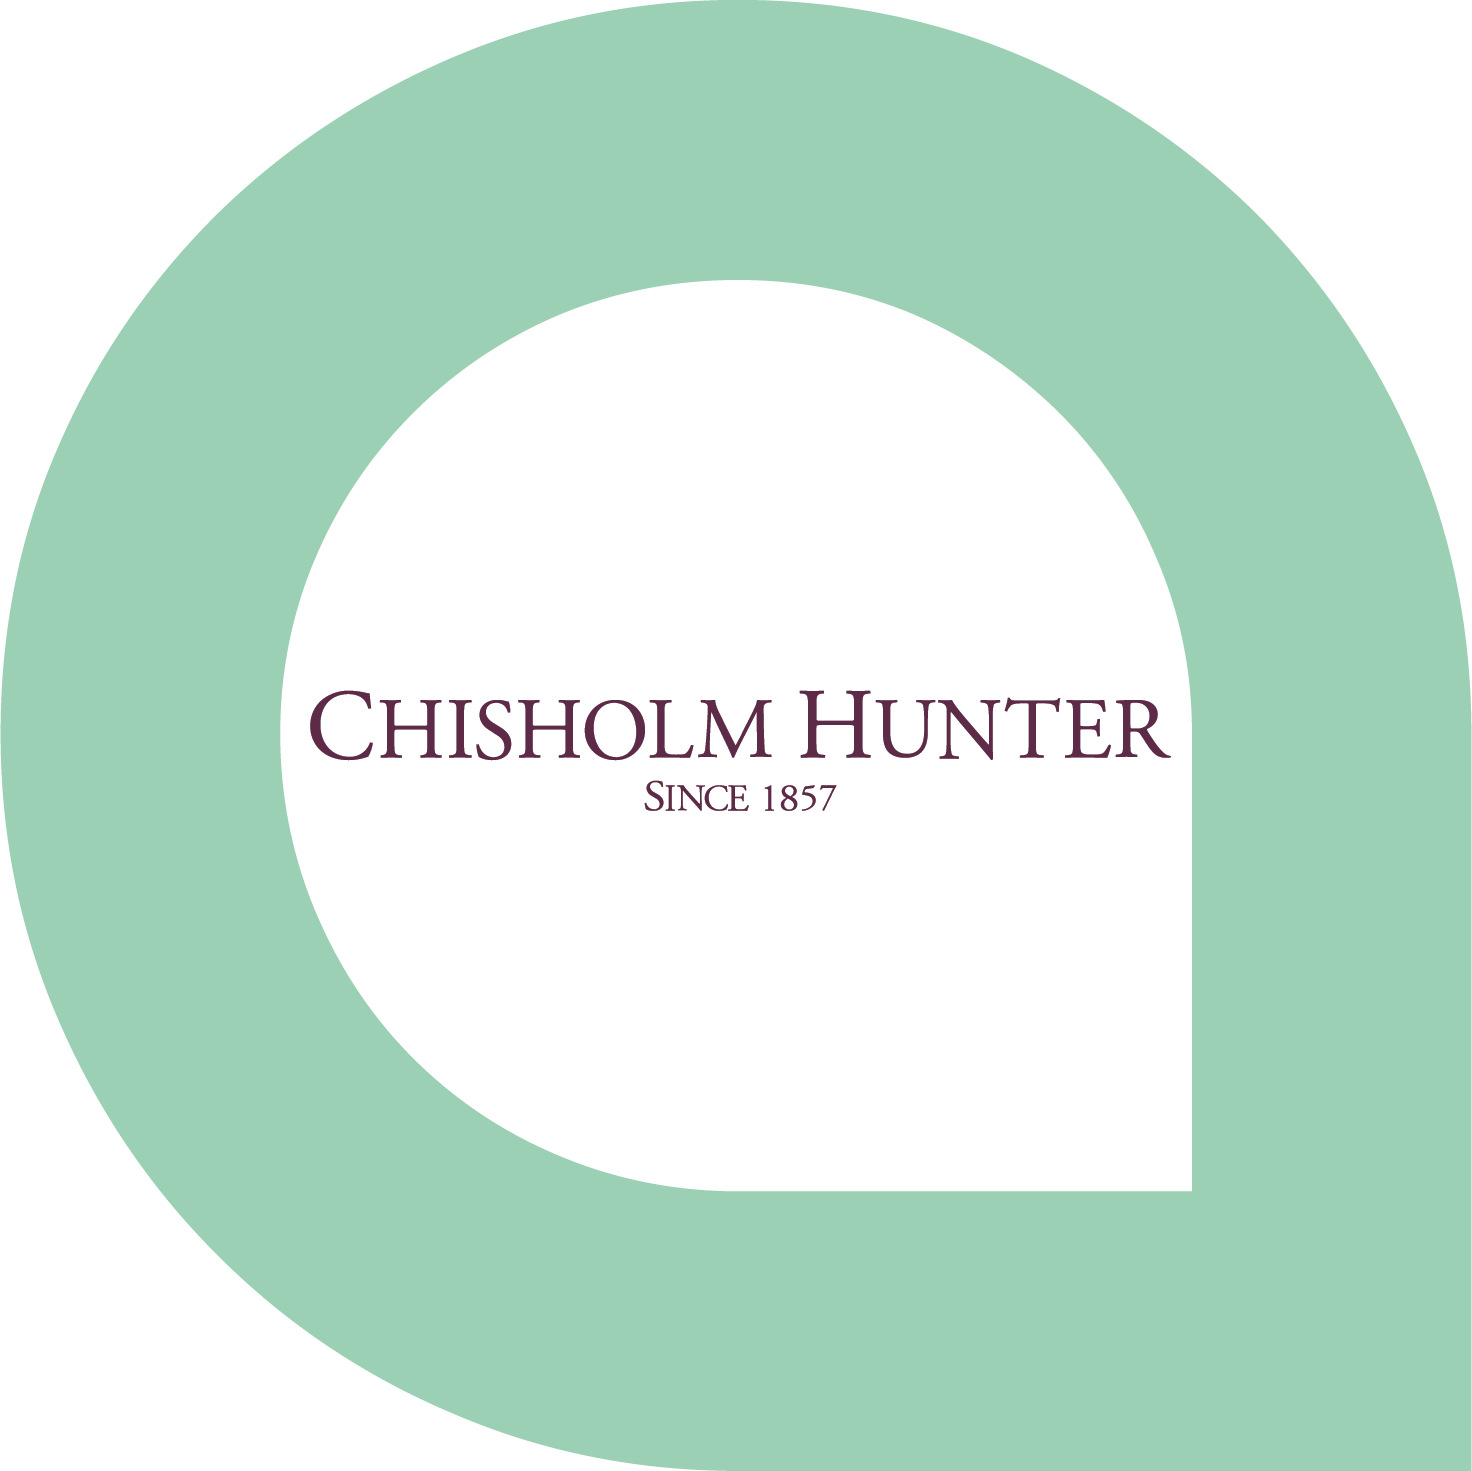 CH client logo 2